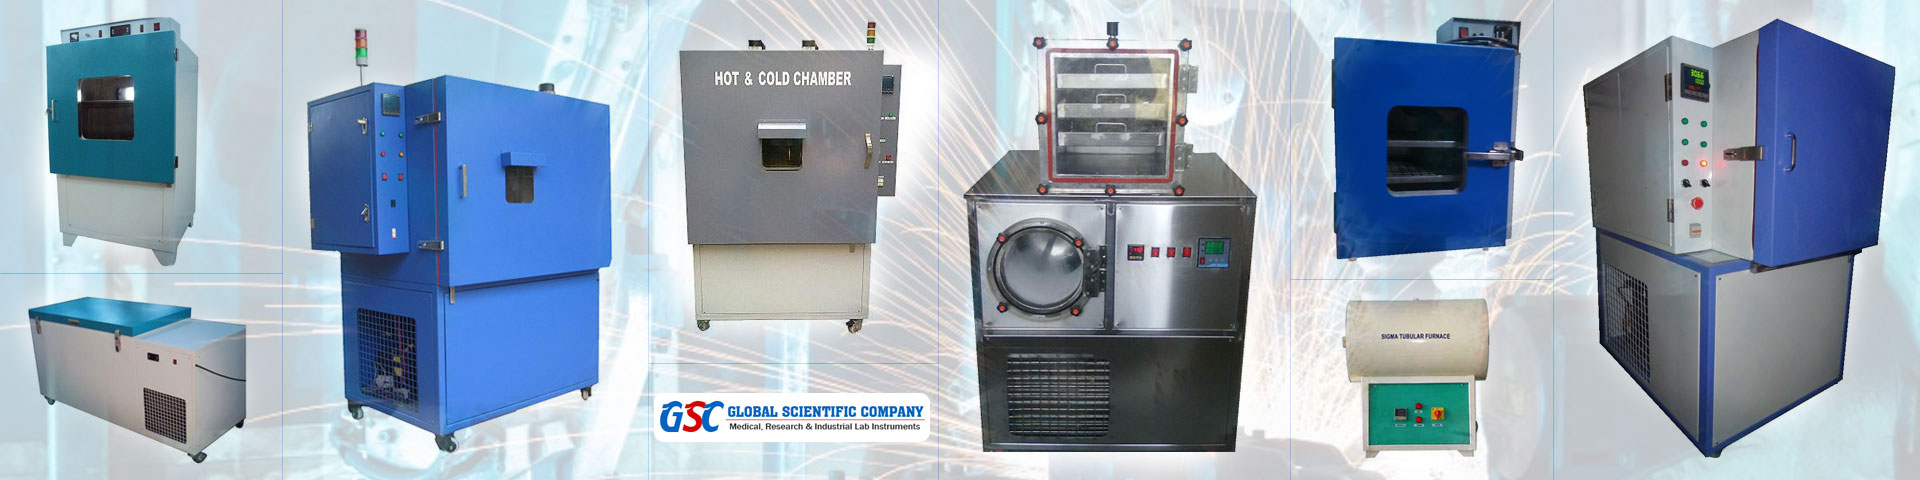 Ultra Low Temperature Freezer - Global Scientific Company Chennai